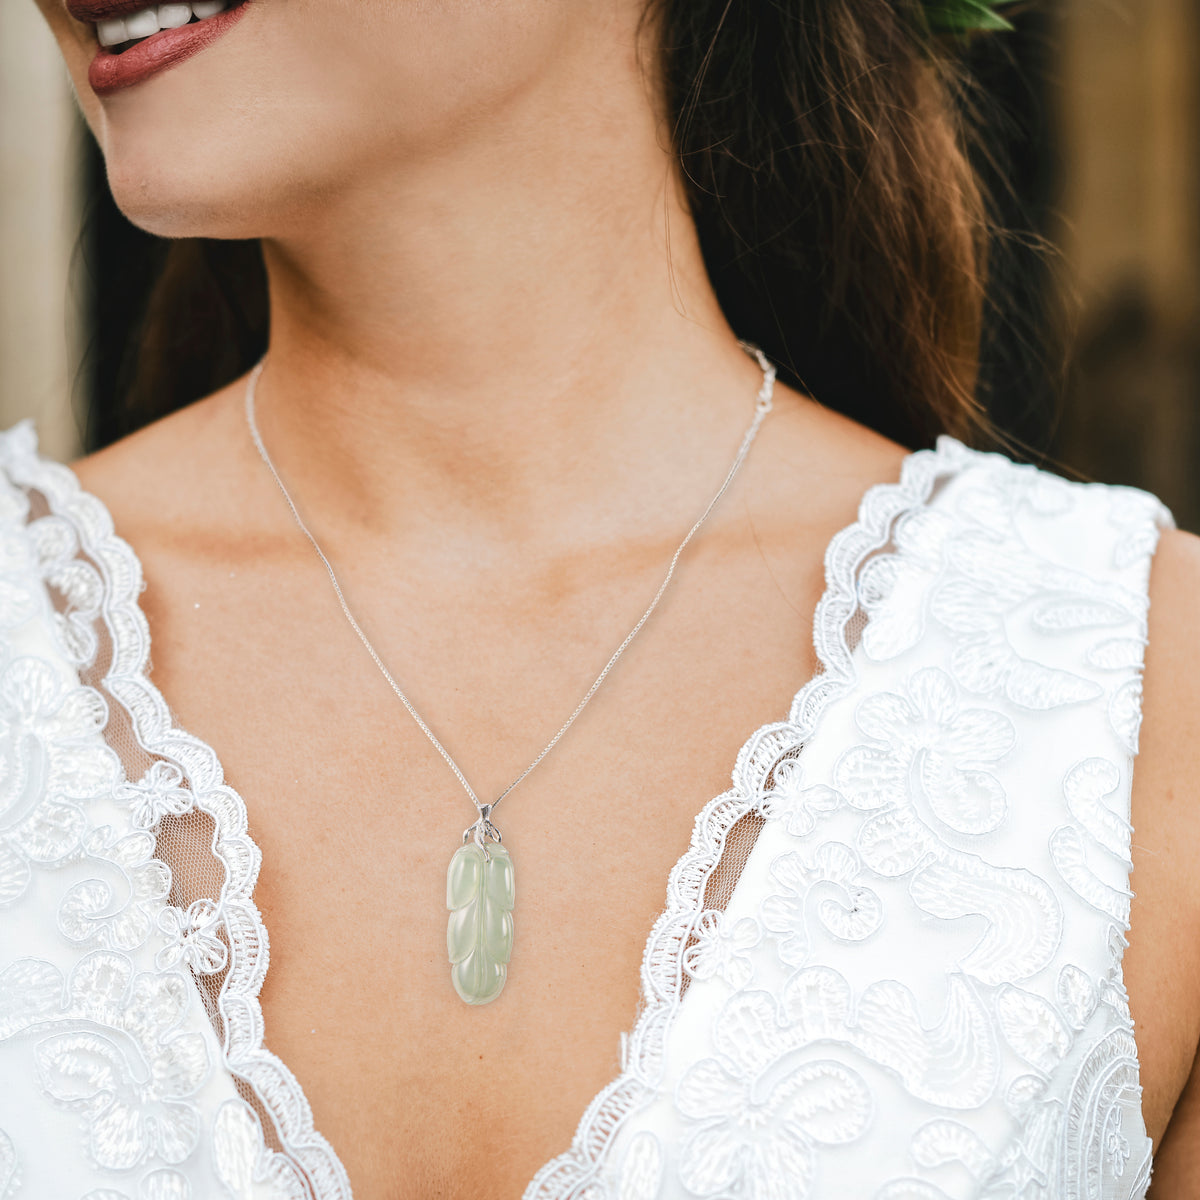 Lady wearing large white jade pendant